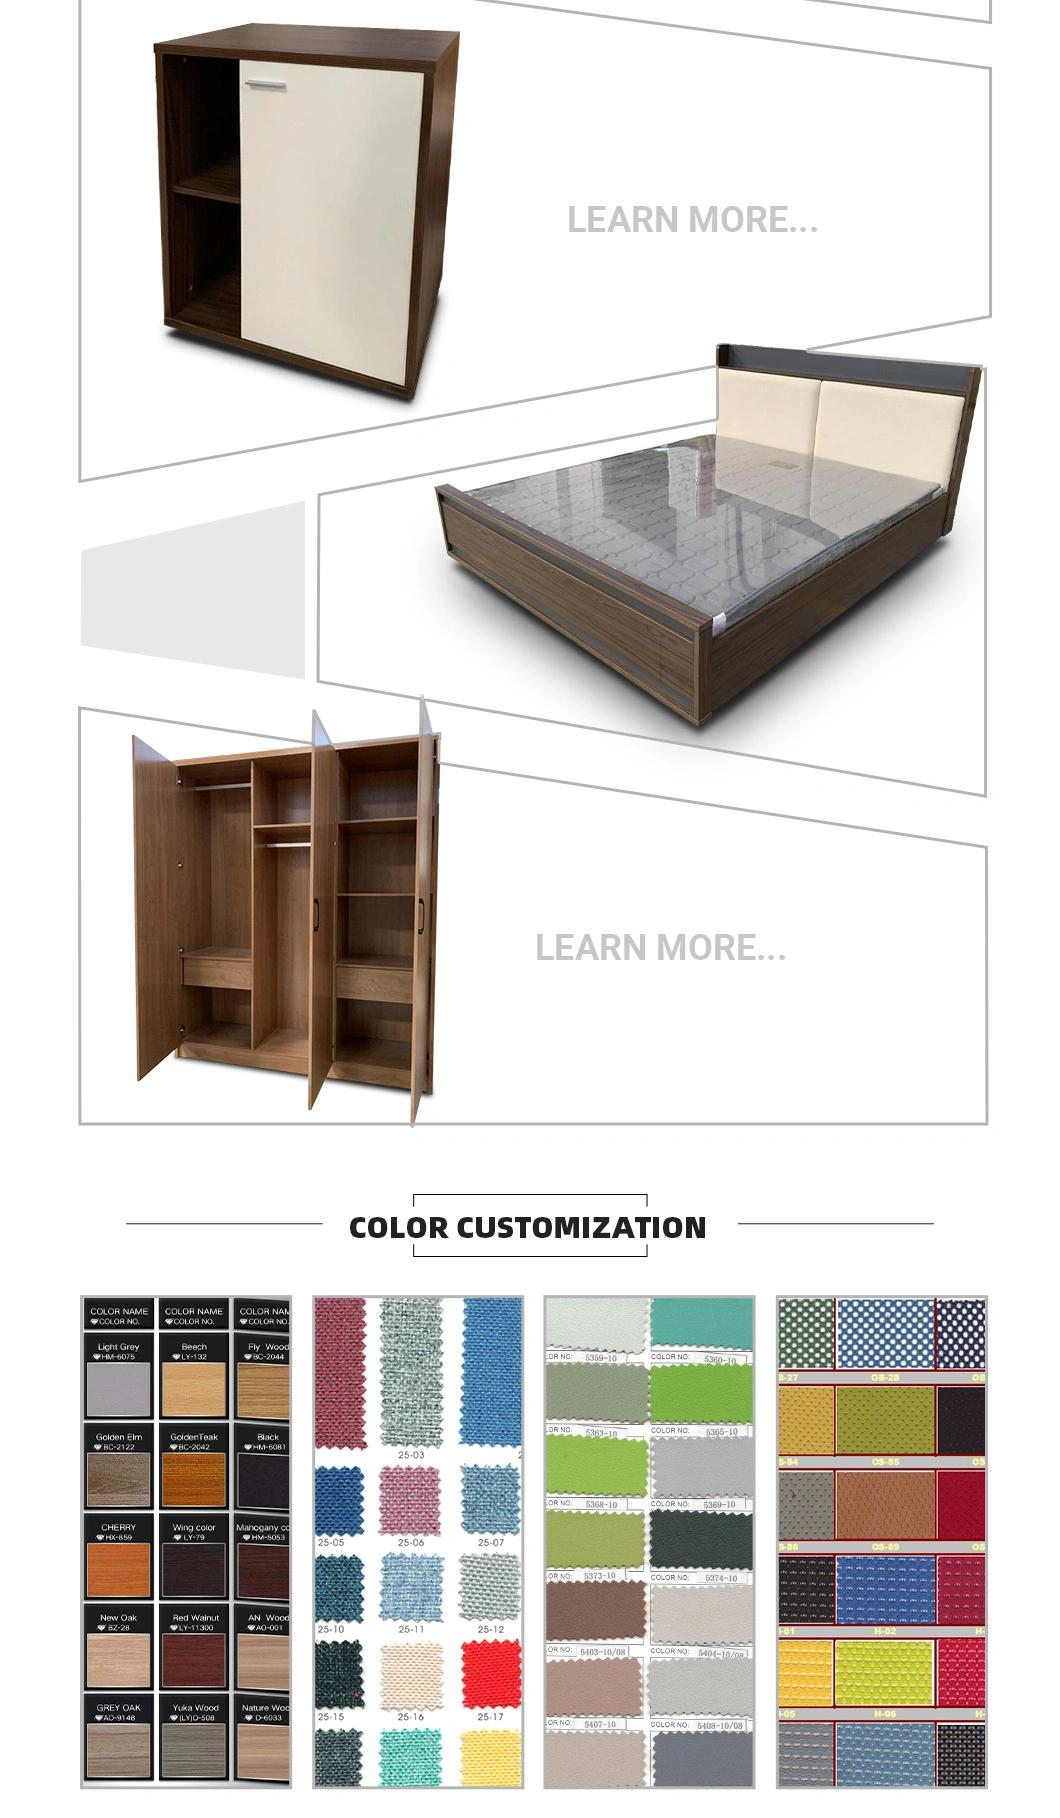 Fashionable Modern Design Corner Living Room U Shaped Fabric Sectional Sofa